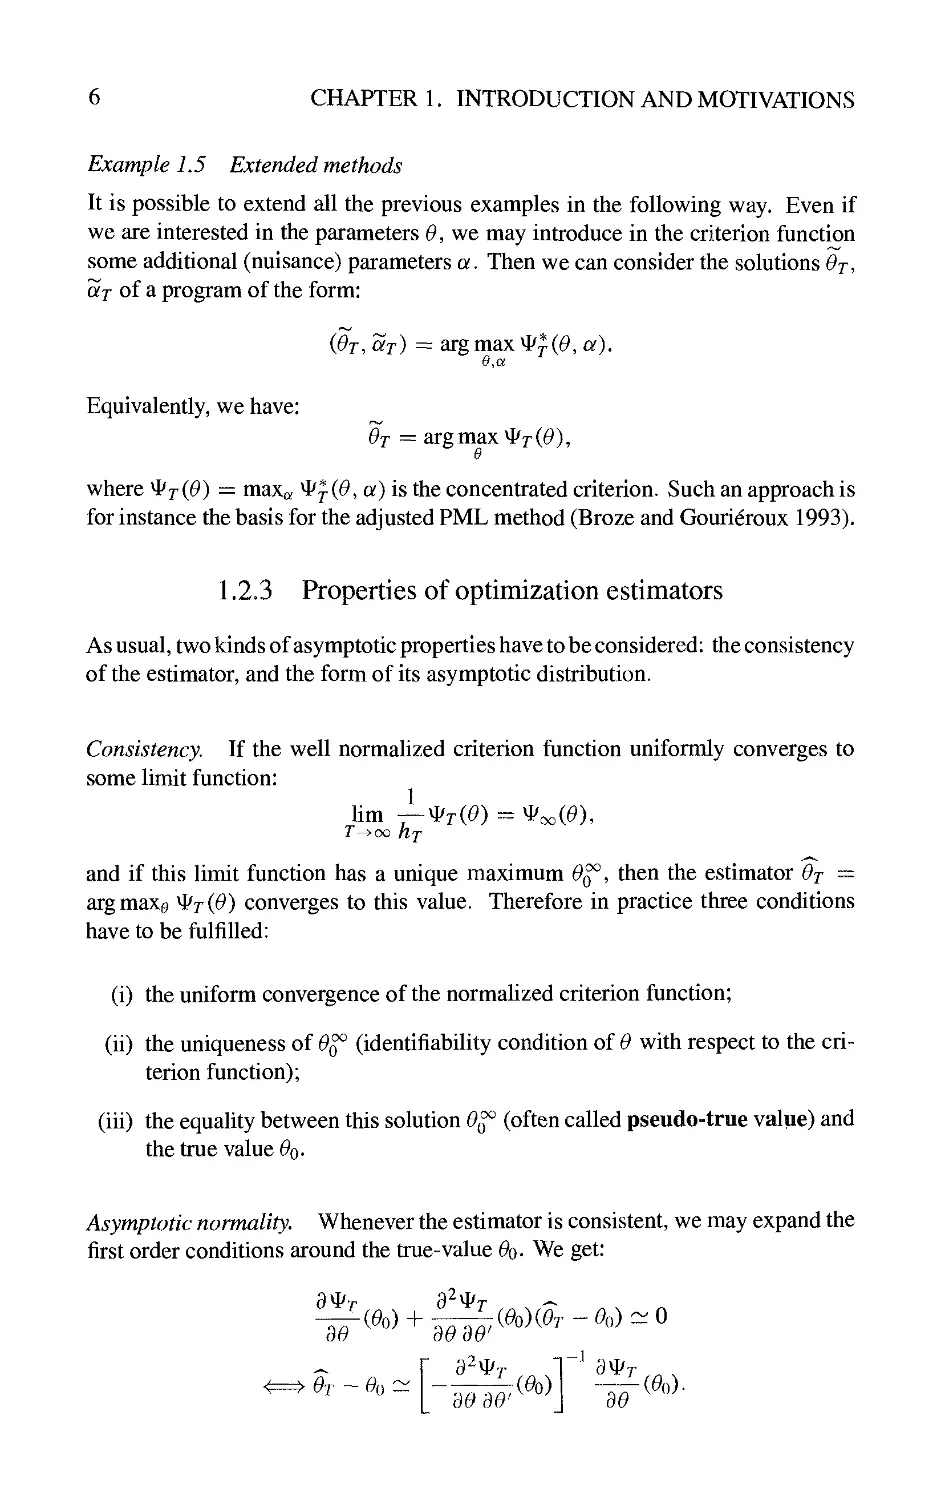 1.2.3 Properties of optimization estimators